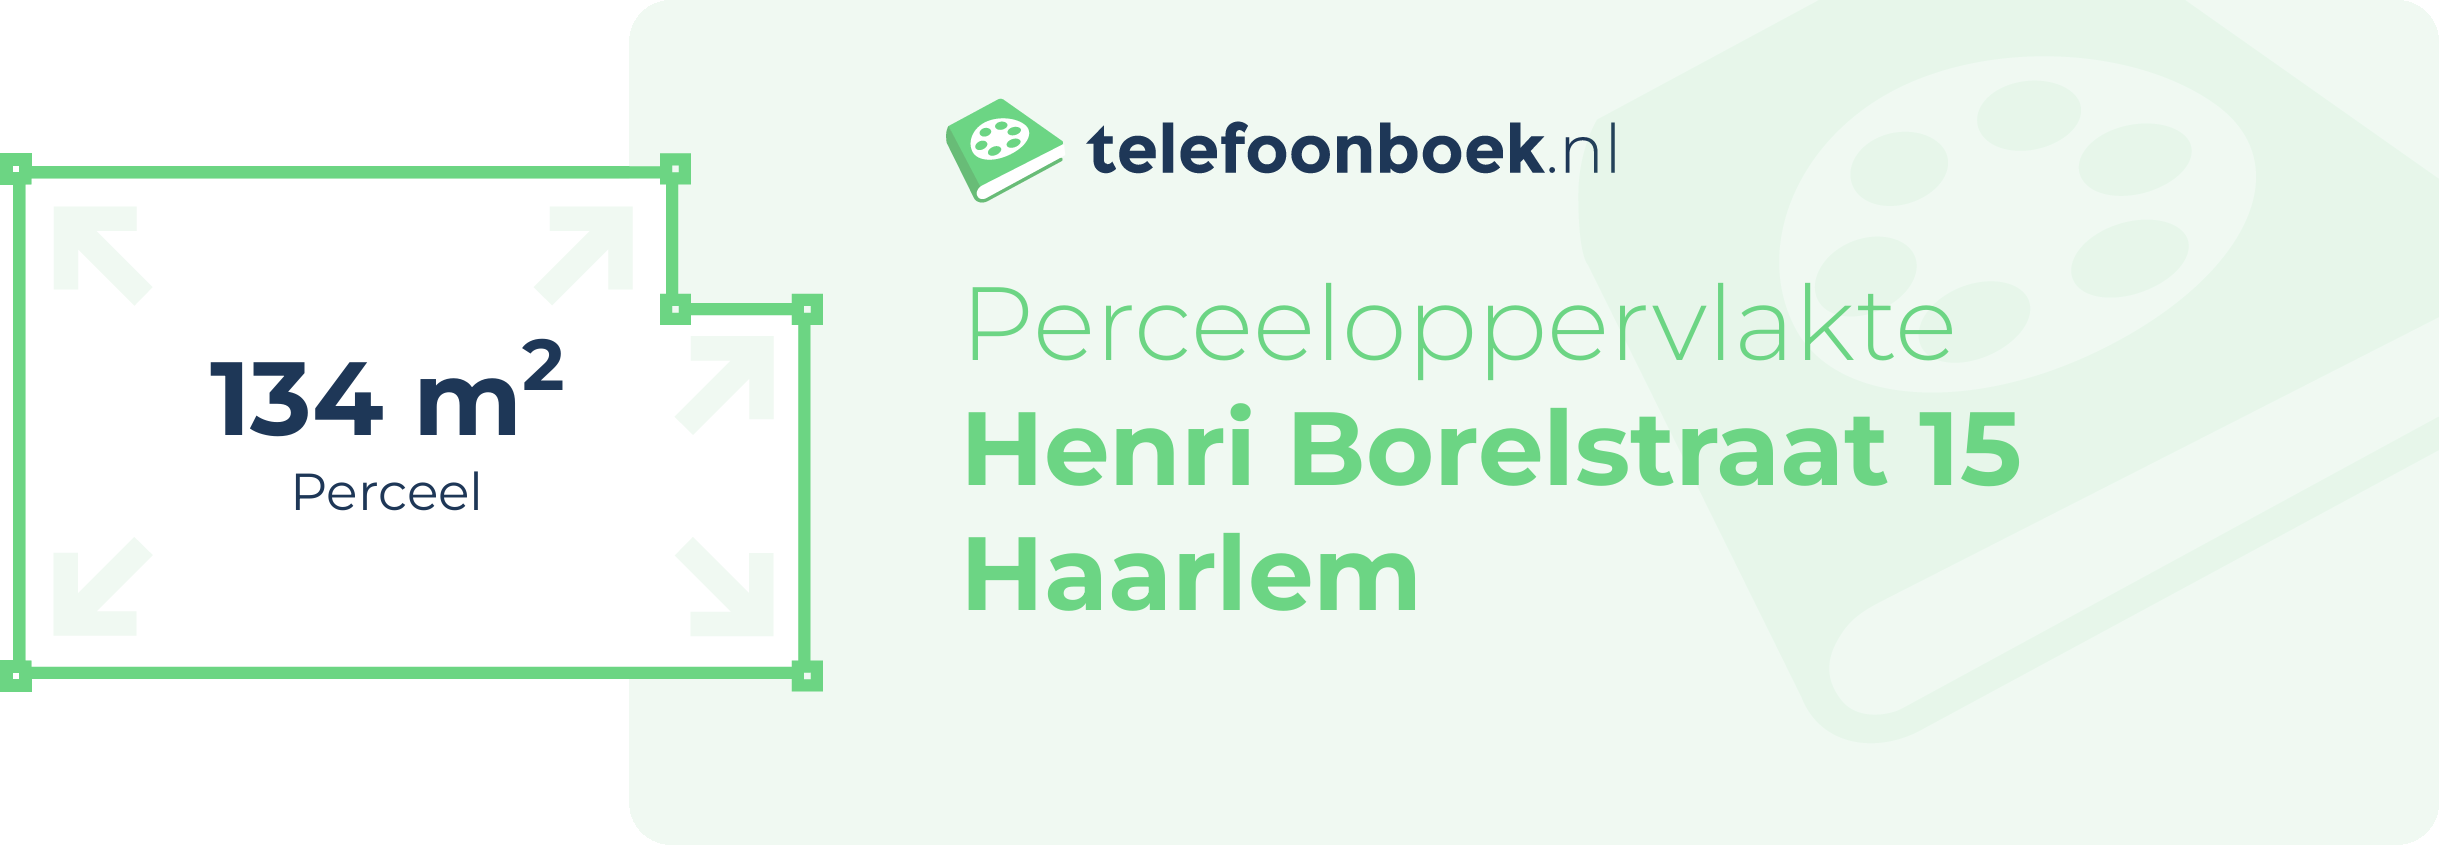 Perceeloppervlakte Henri Borelstraat 15 Haarlem